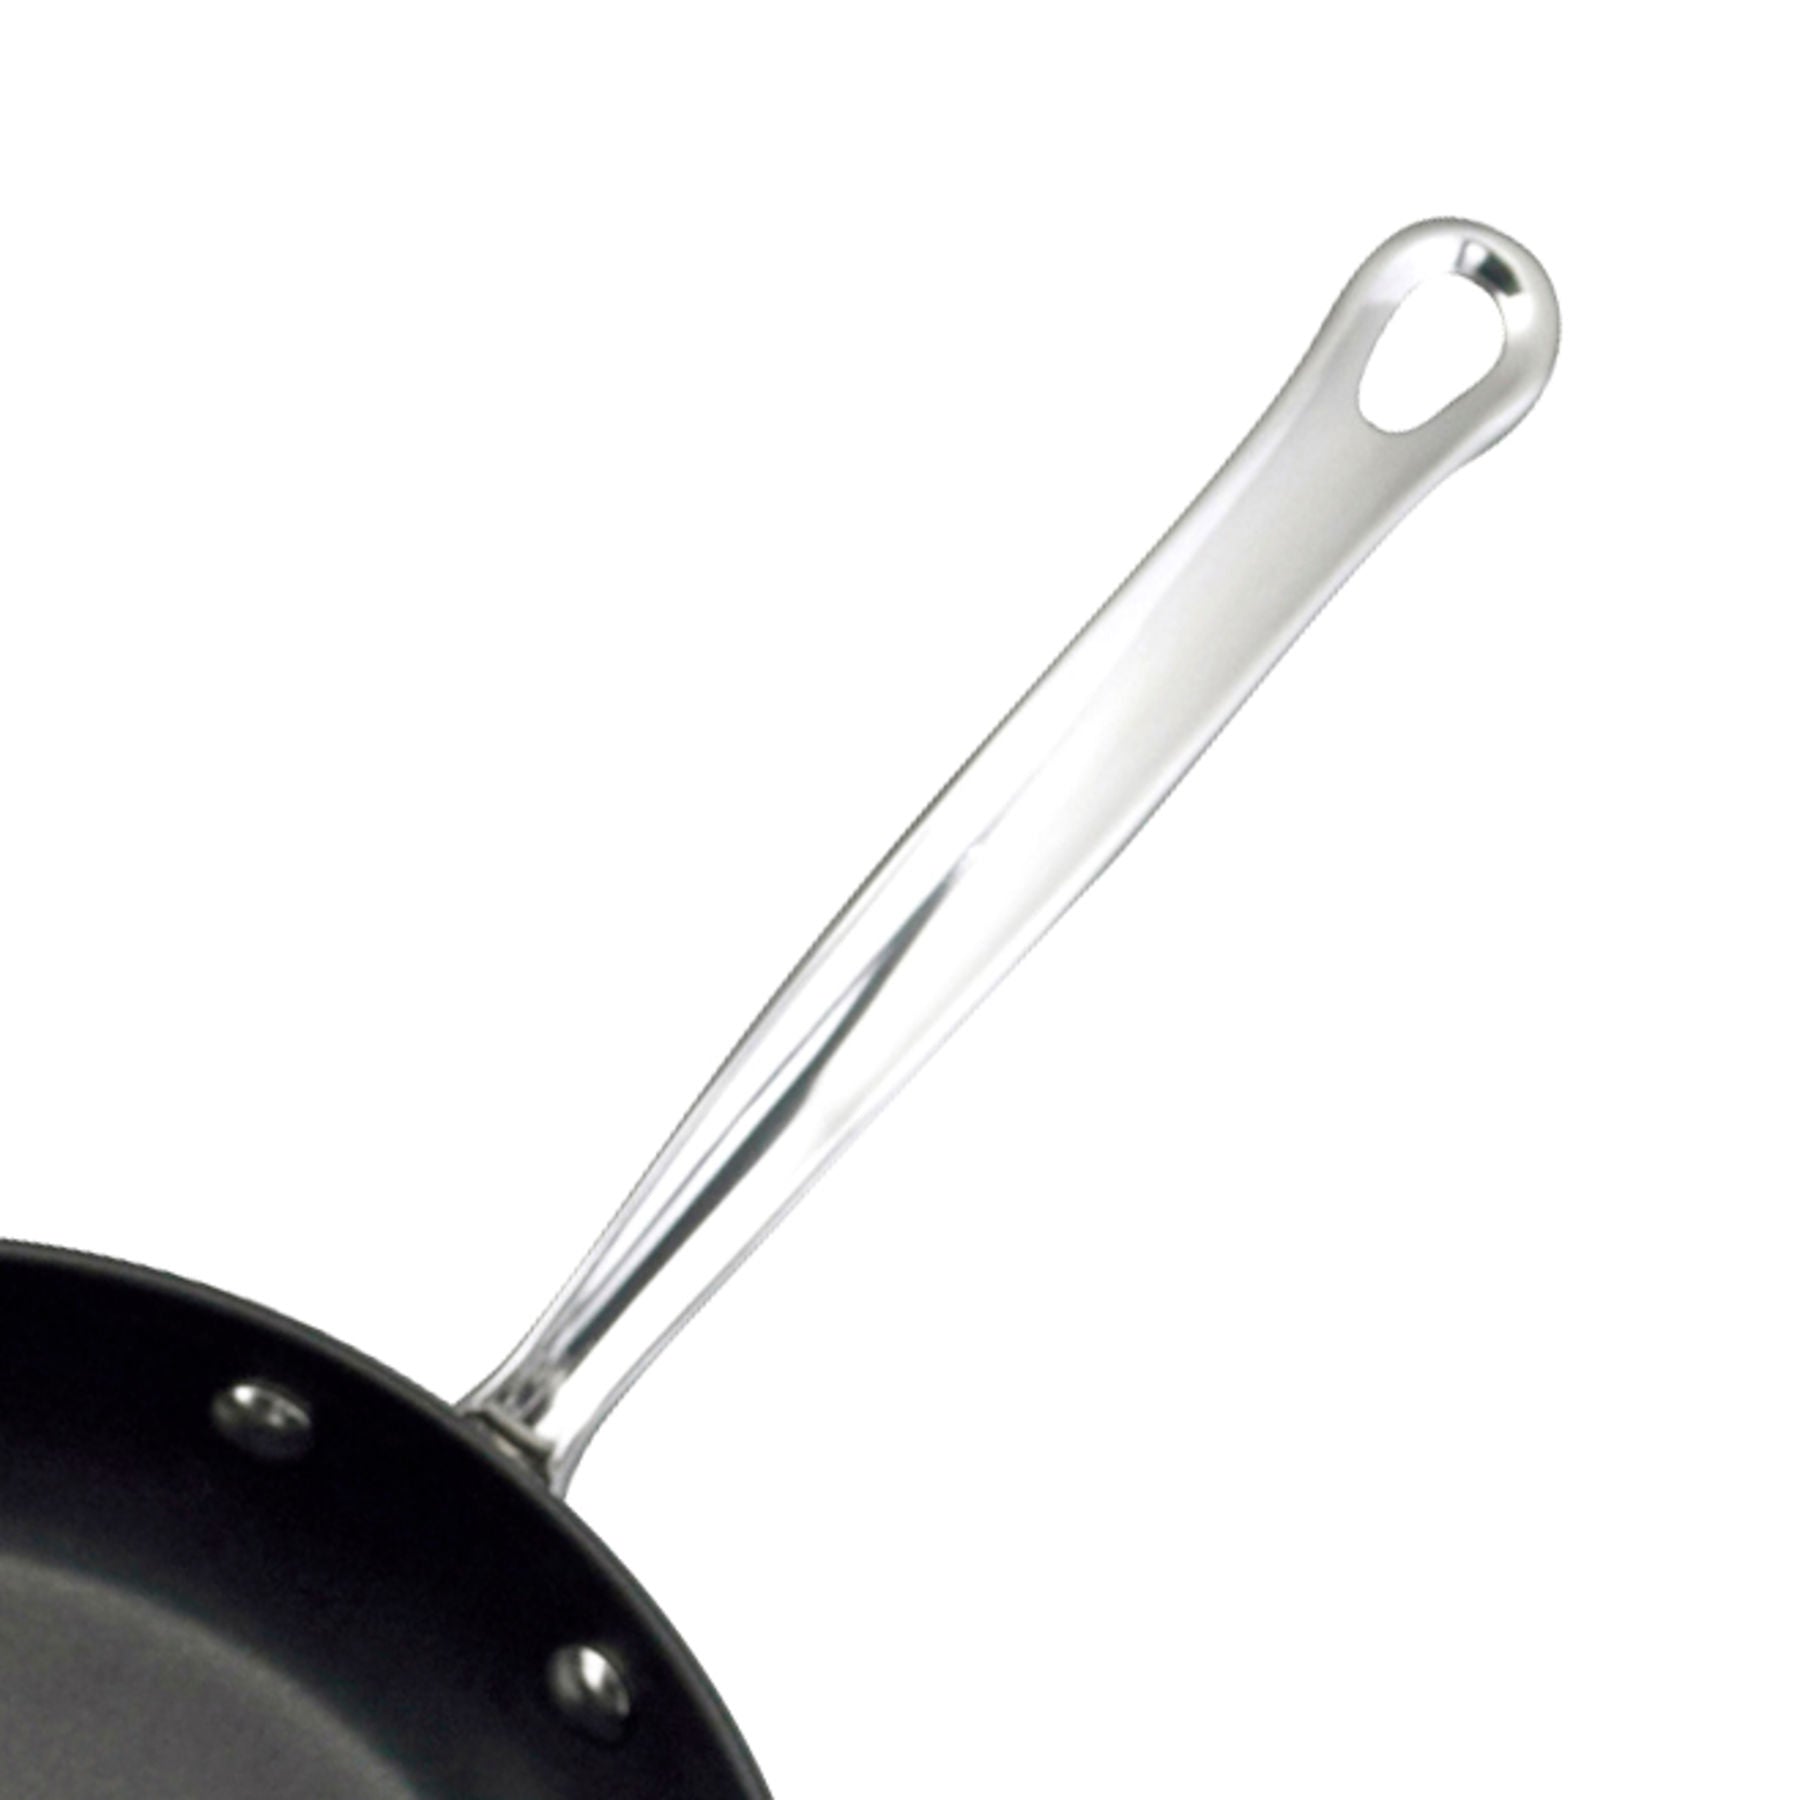 Farberware Millennium Stainless Steel Nonstick Cookware Induction Pots and  Pans Set, 10-Piece